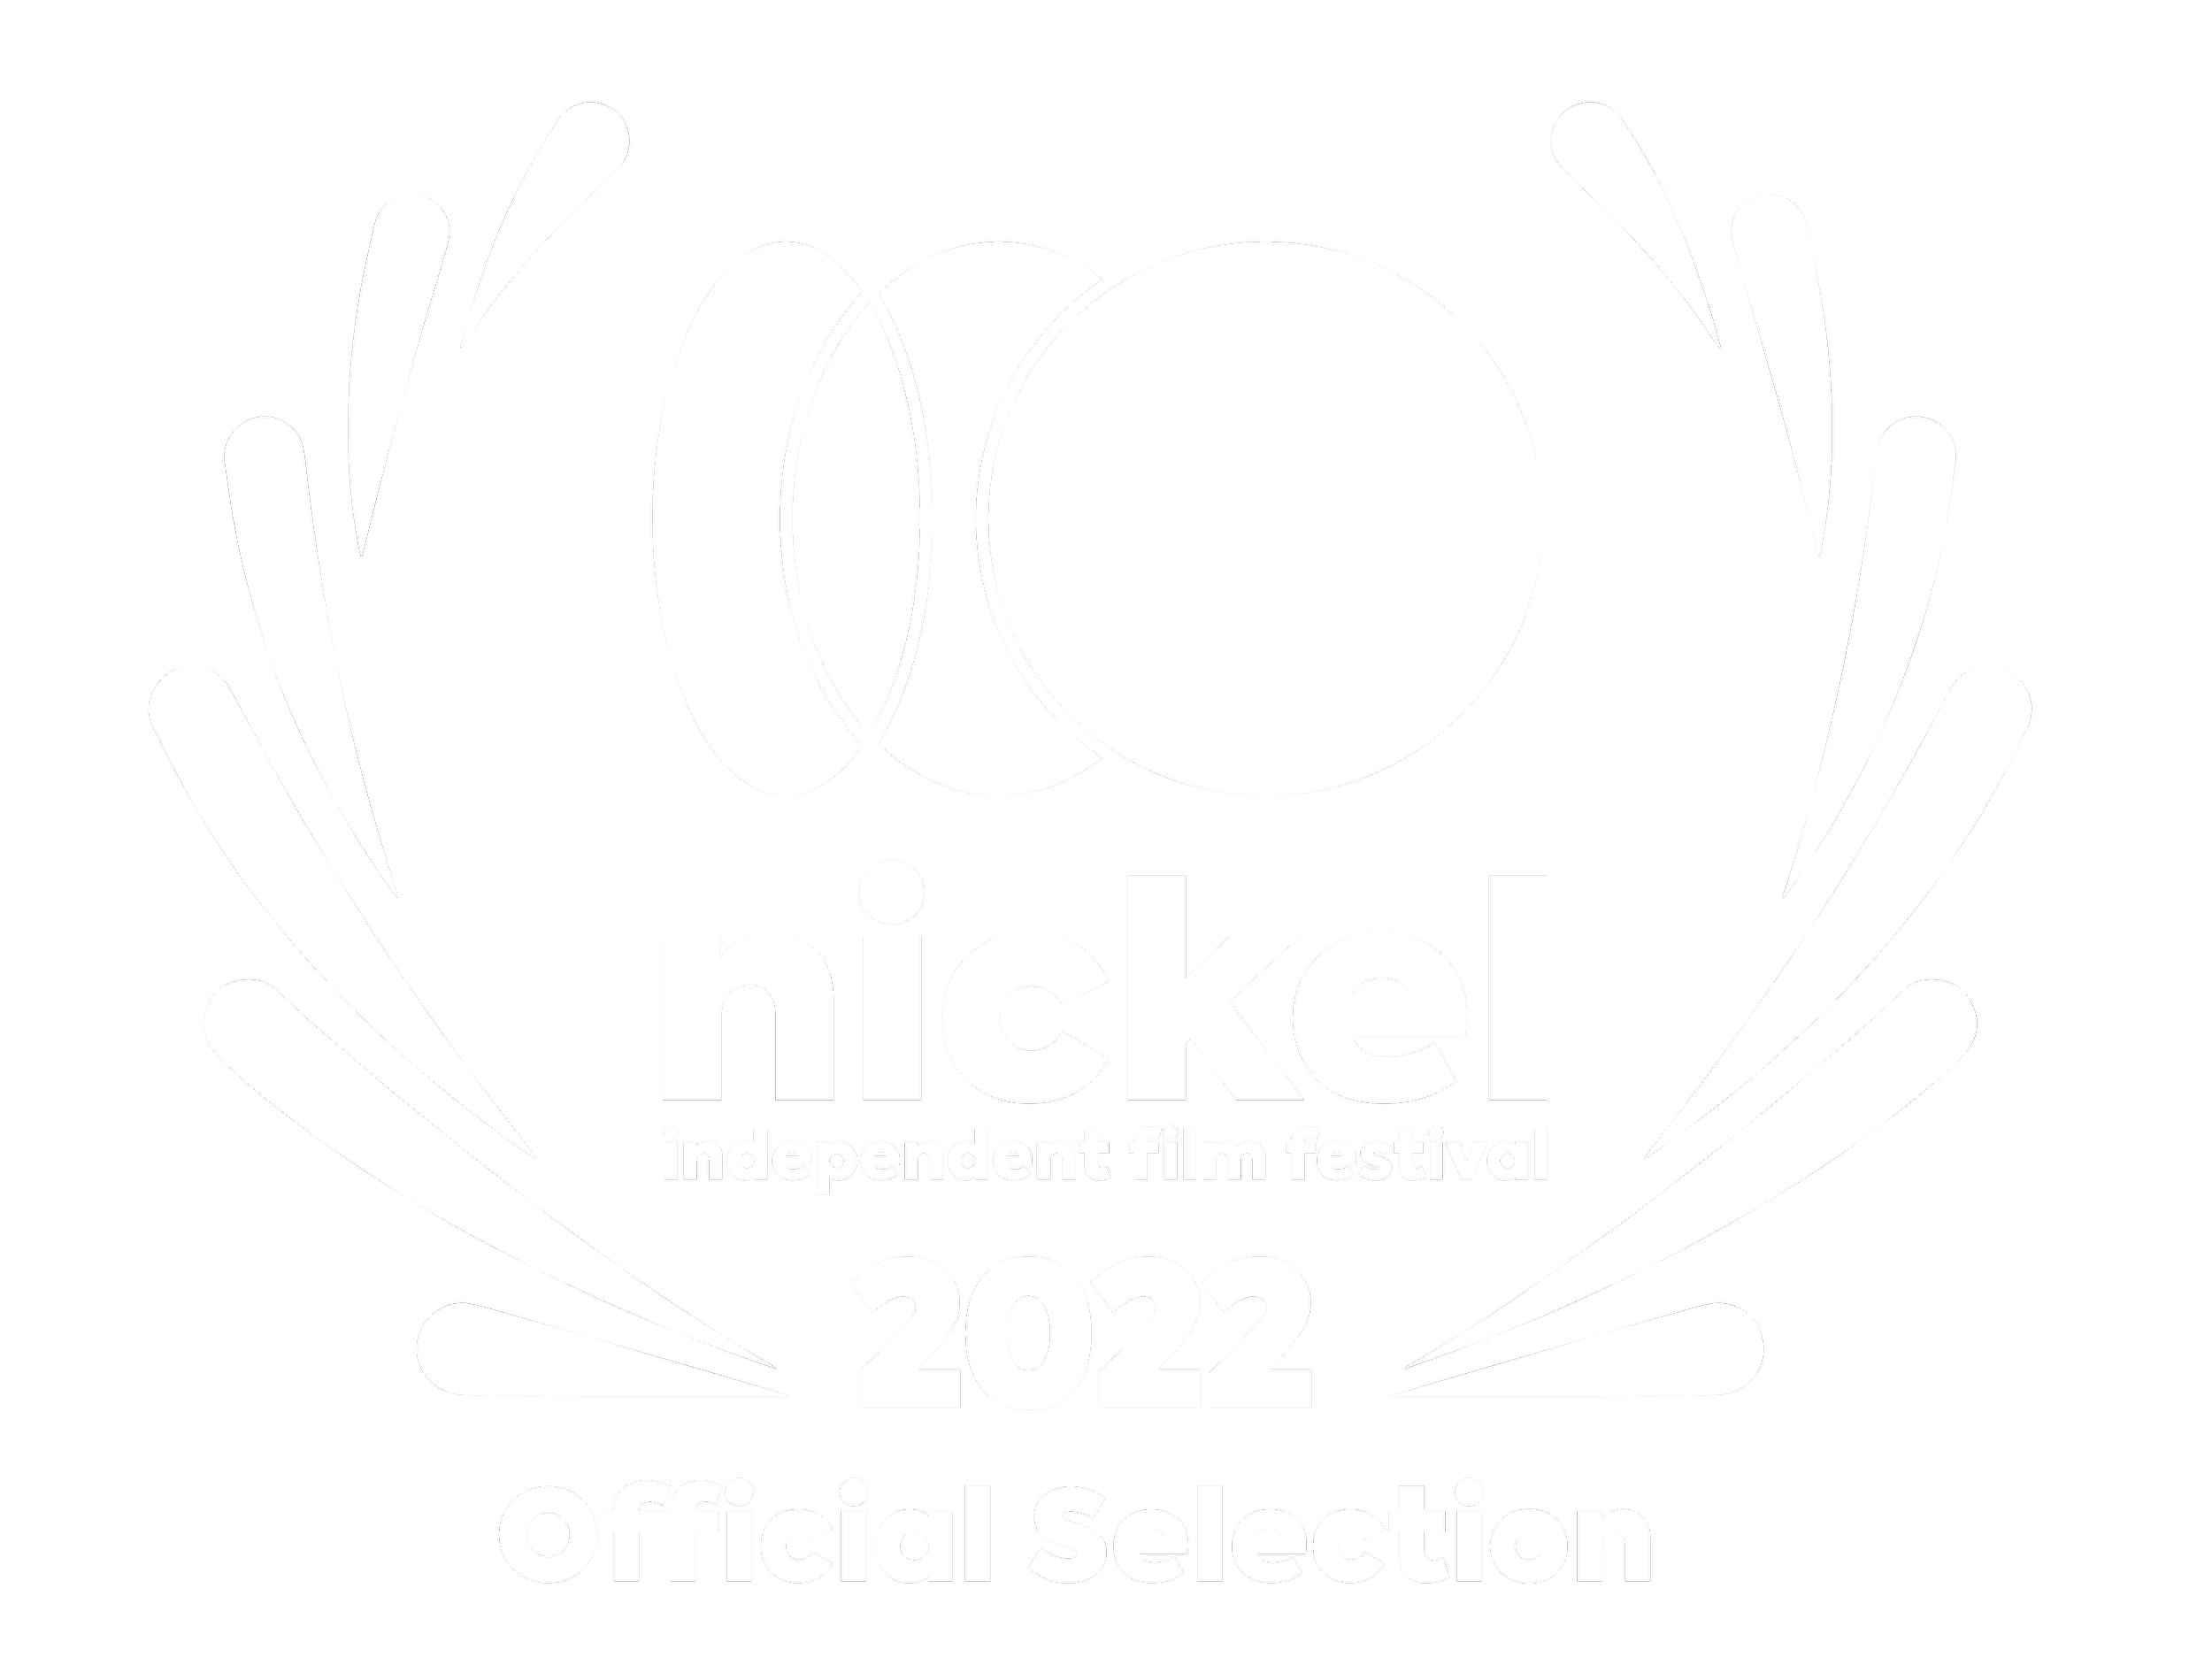 Nickel film festival official selection laurel